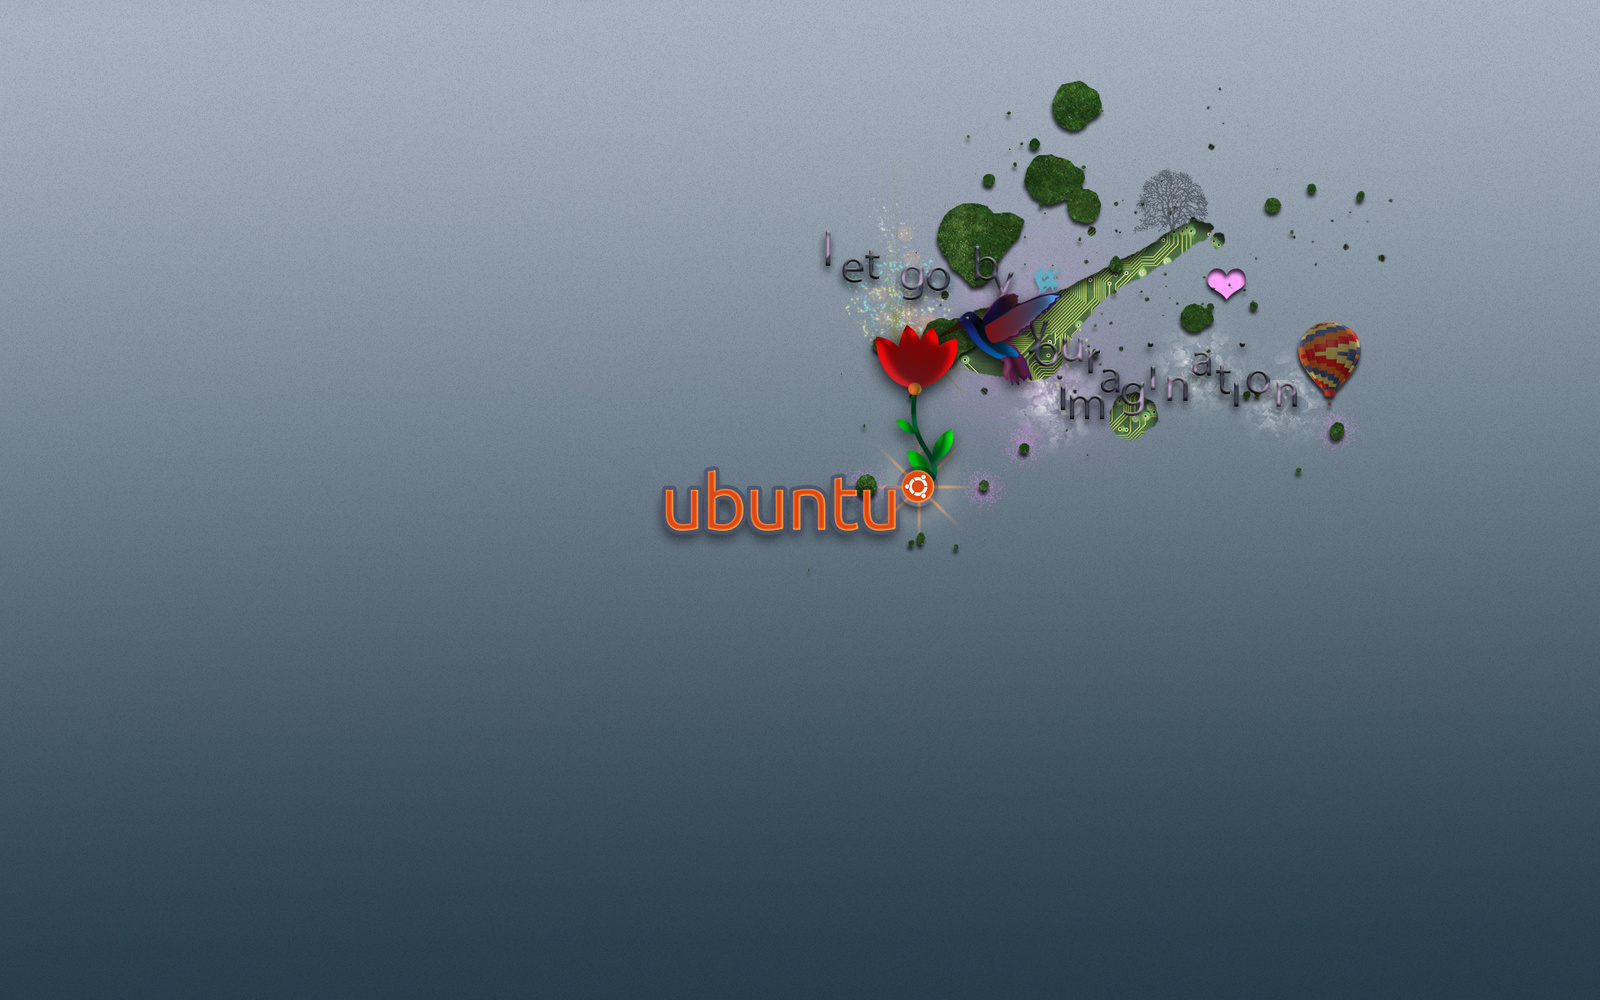 imagine ubuntu by momez-d3aldet